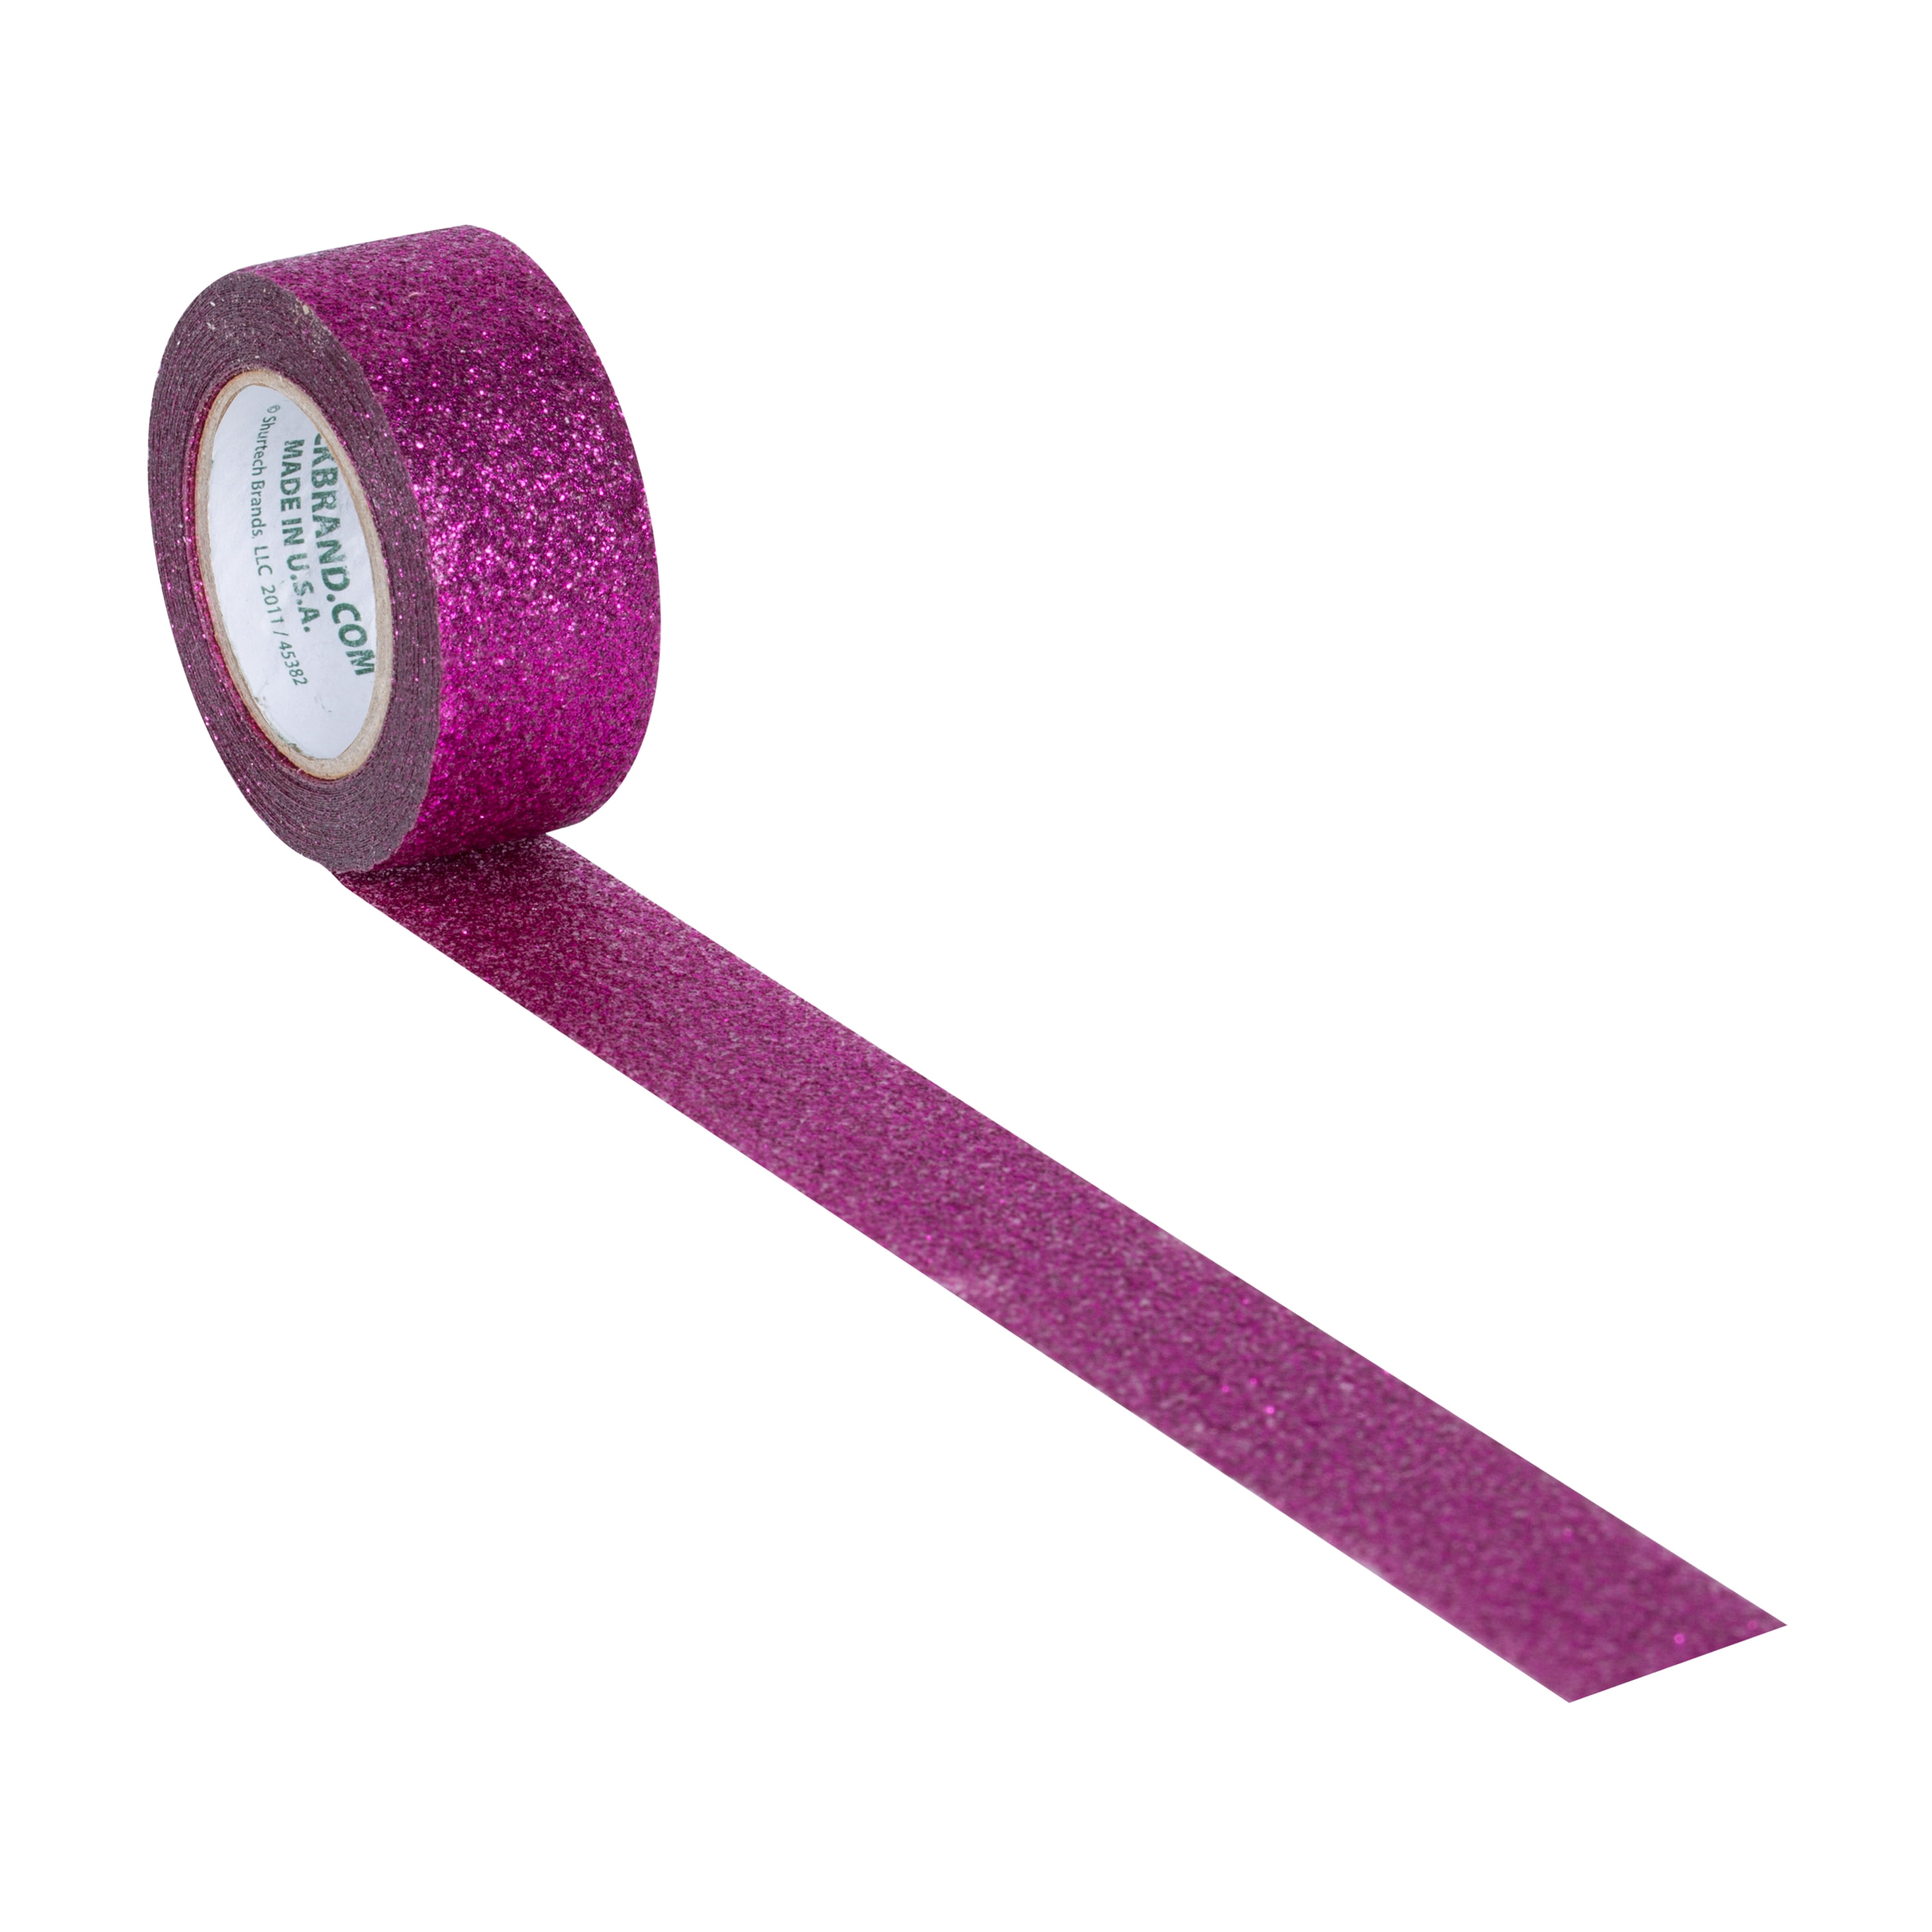 Pink Glitter Tape with Foil I Love You - 15mm x 5m - Romantic Sparkl –  MindTheWrap